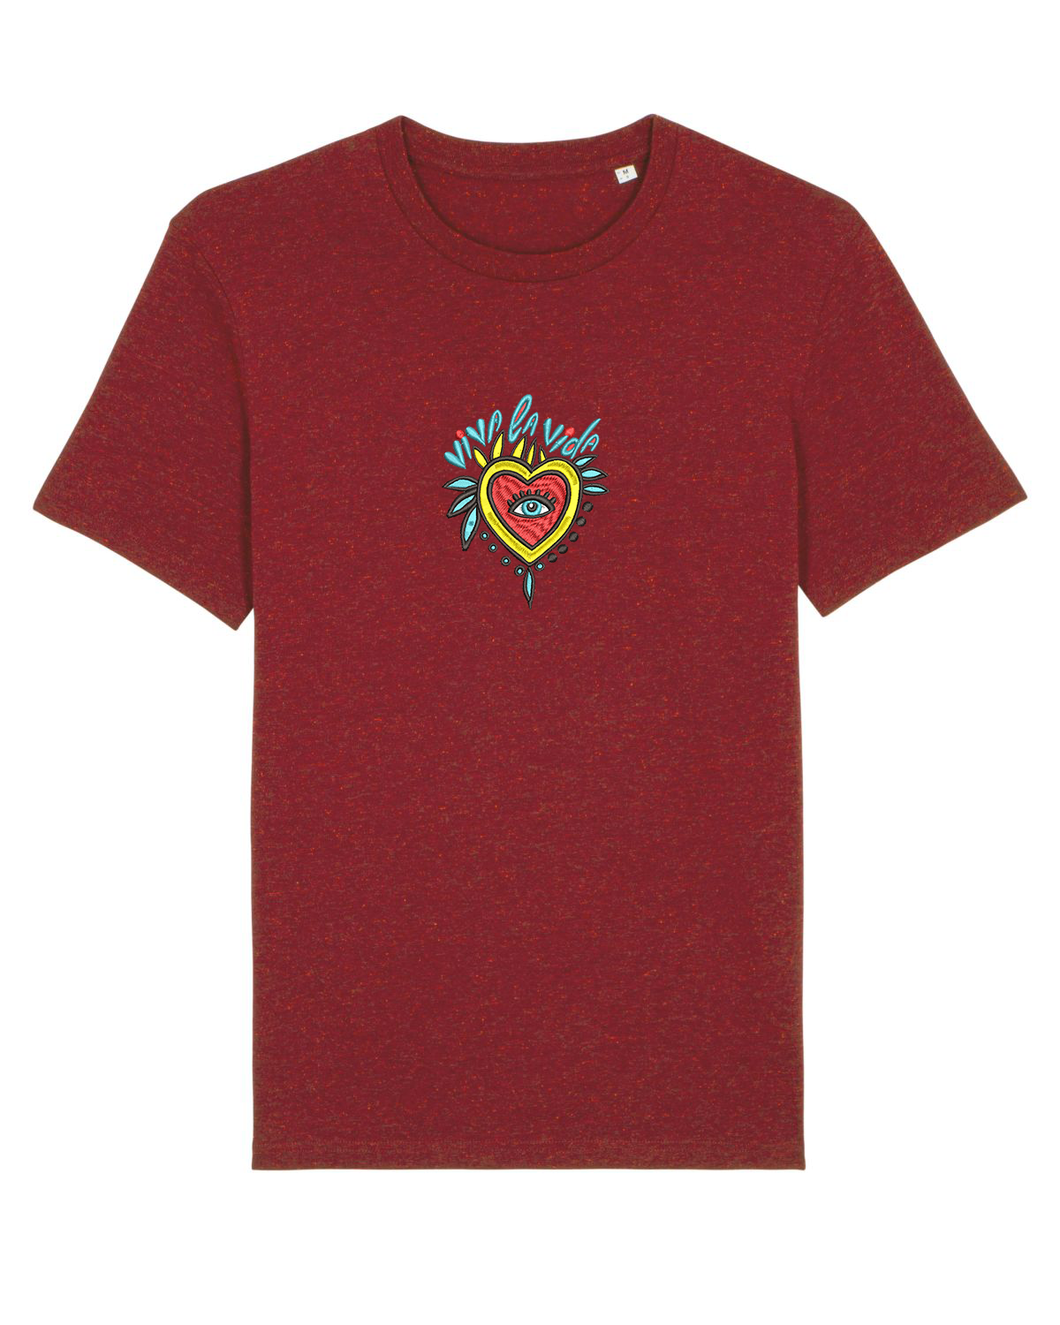 VIVA LA VIDA -  Embroidered women's t-shirt